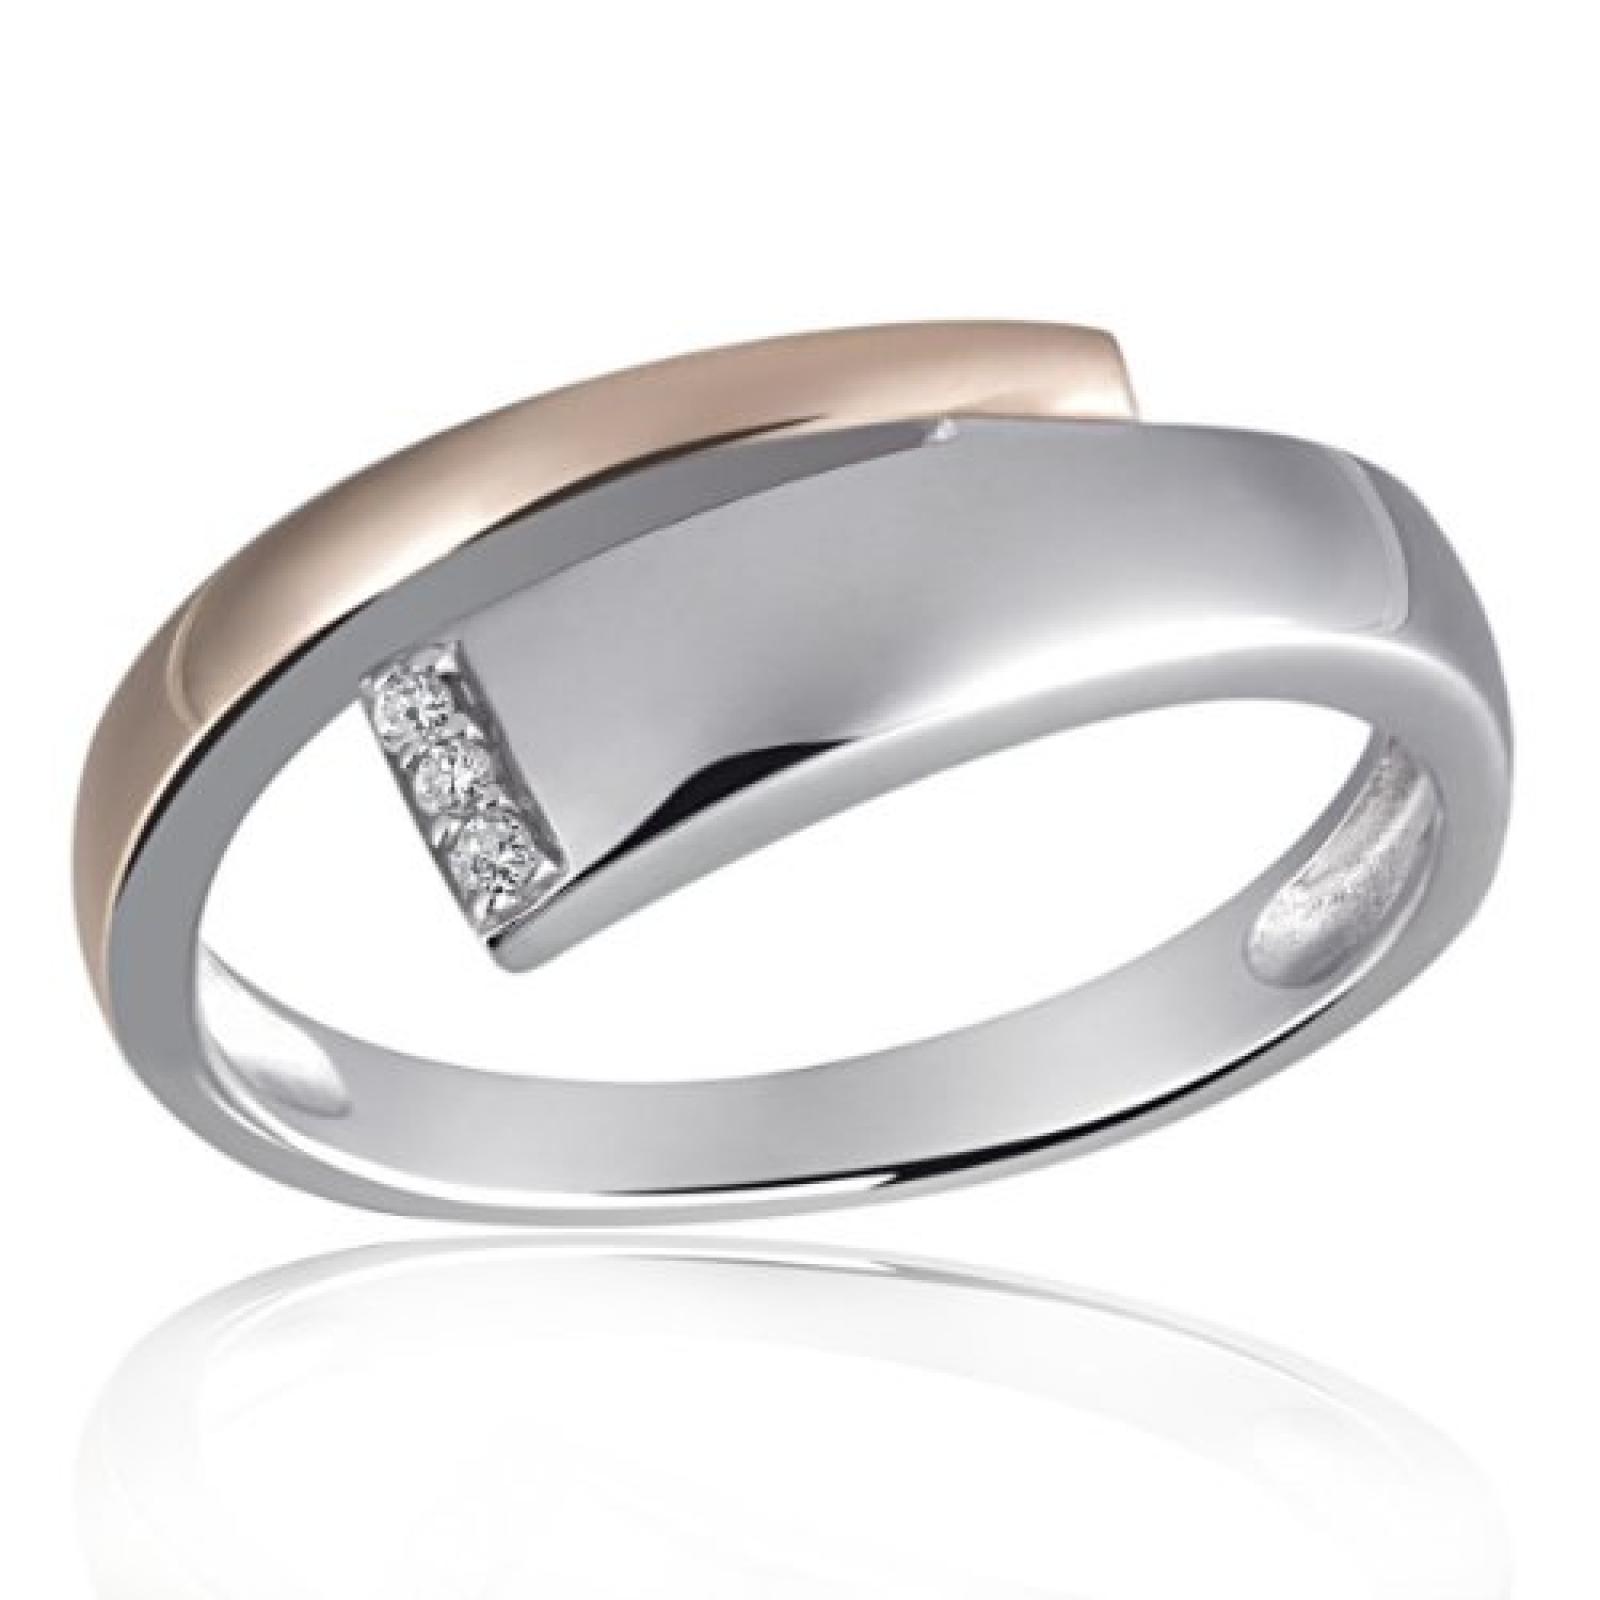 Goldmaid Damen-Ring 925 Sterling Silber weiß Diamanten Bicolor 3 Diamanten 0,03 ct. Sd R6118S52 